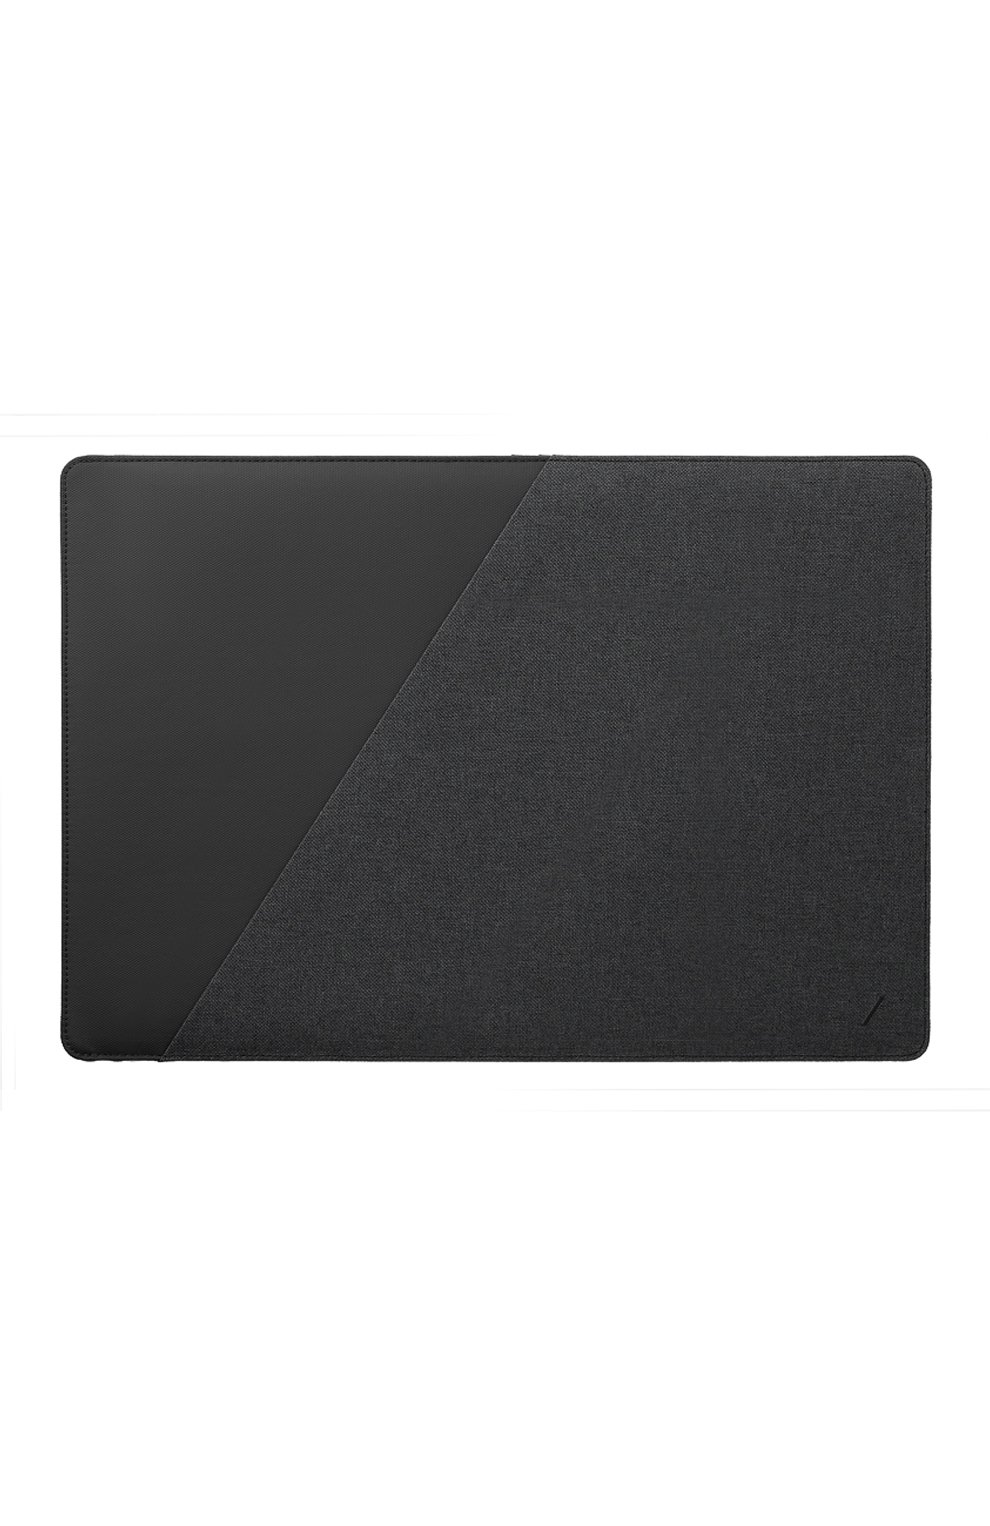 Защитный чехол stow slim sleeve для macbook 15/16 NATIVE UNION темно-серого цвета, арт. STOW-MBS-GRY-16 | Фото 1